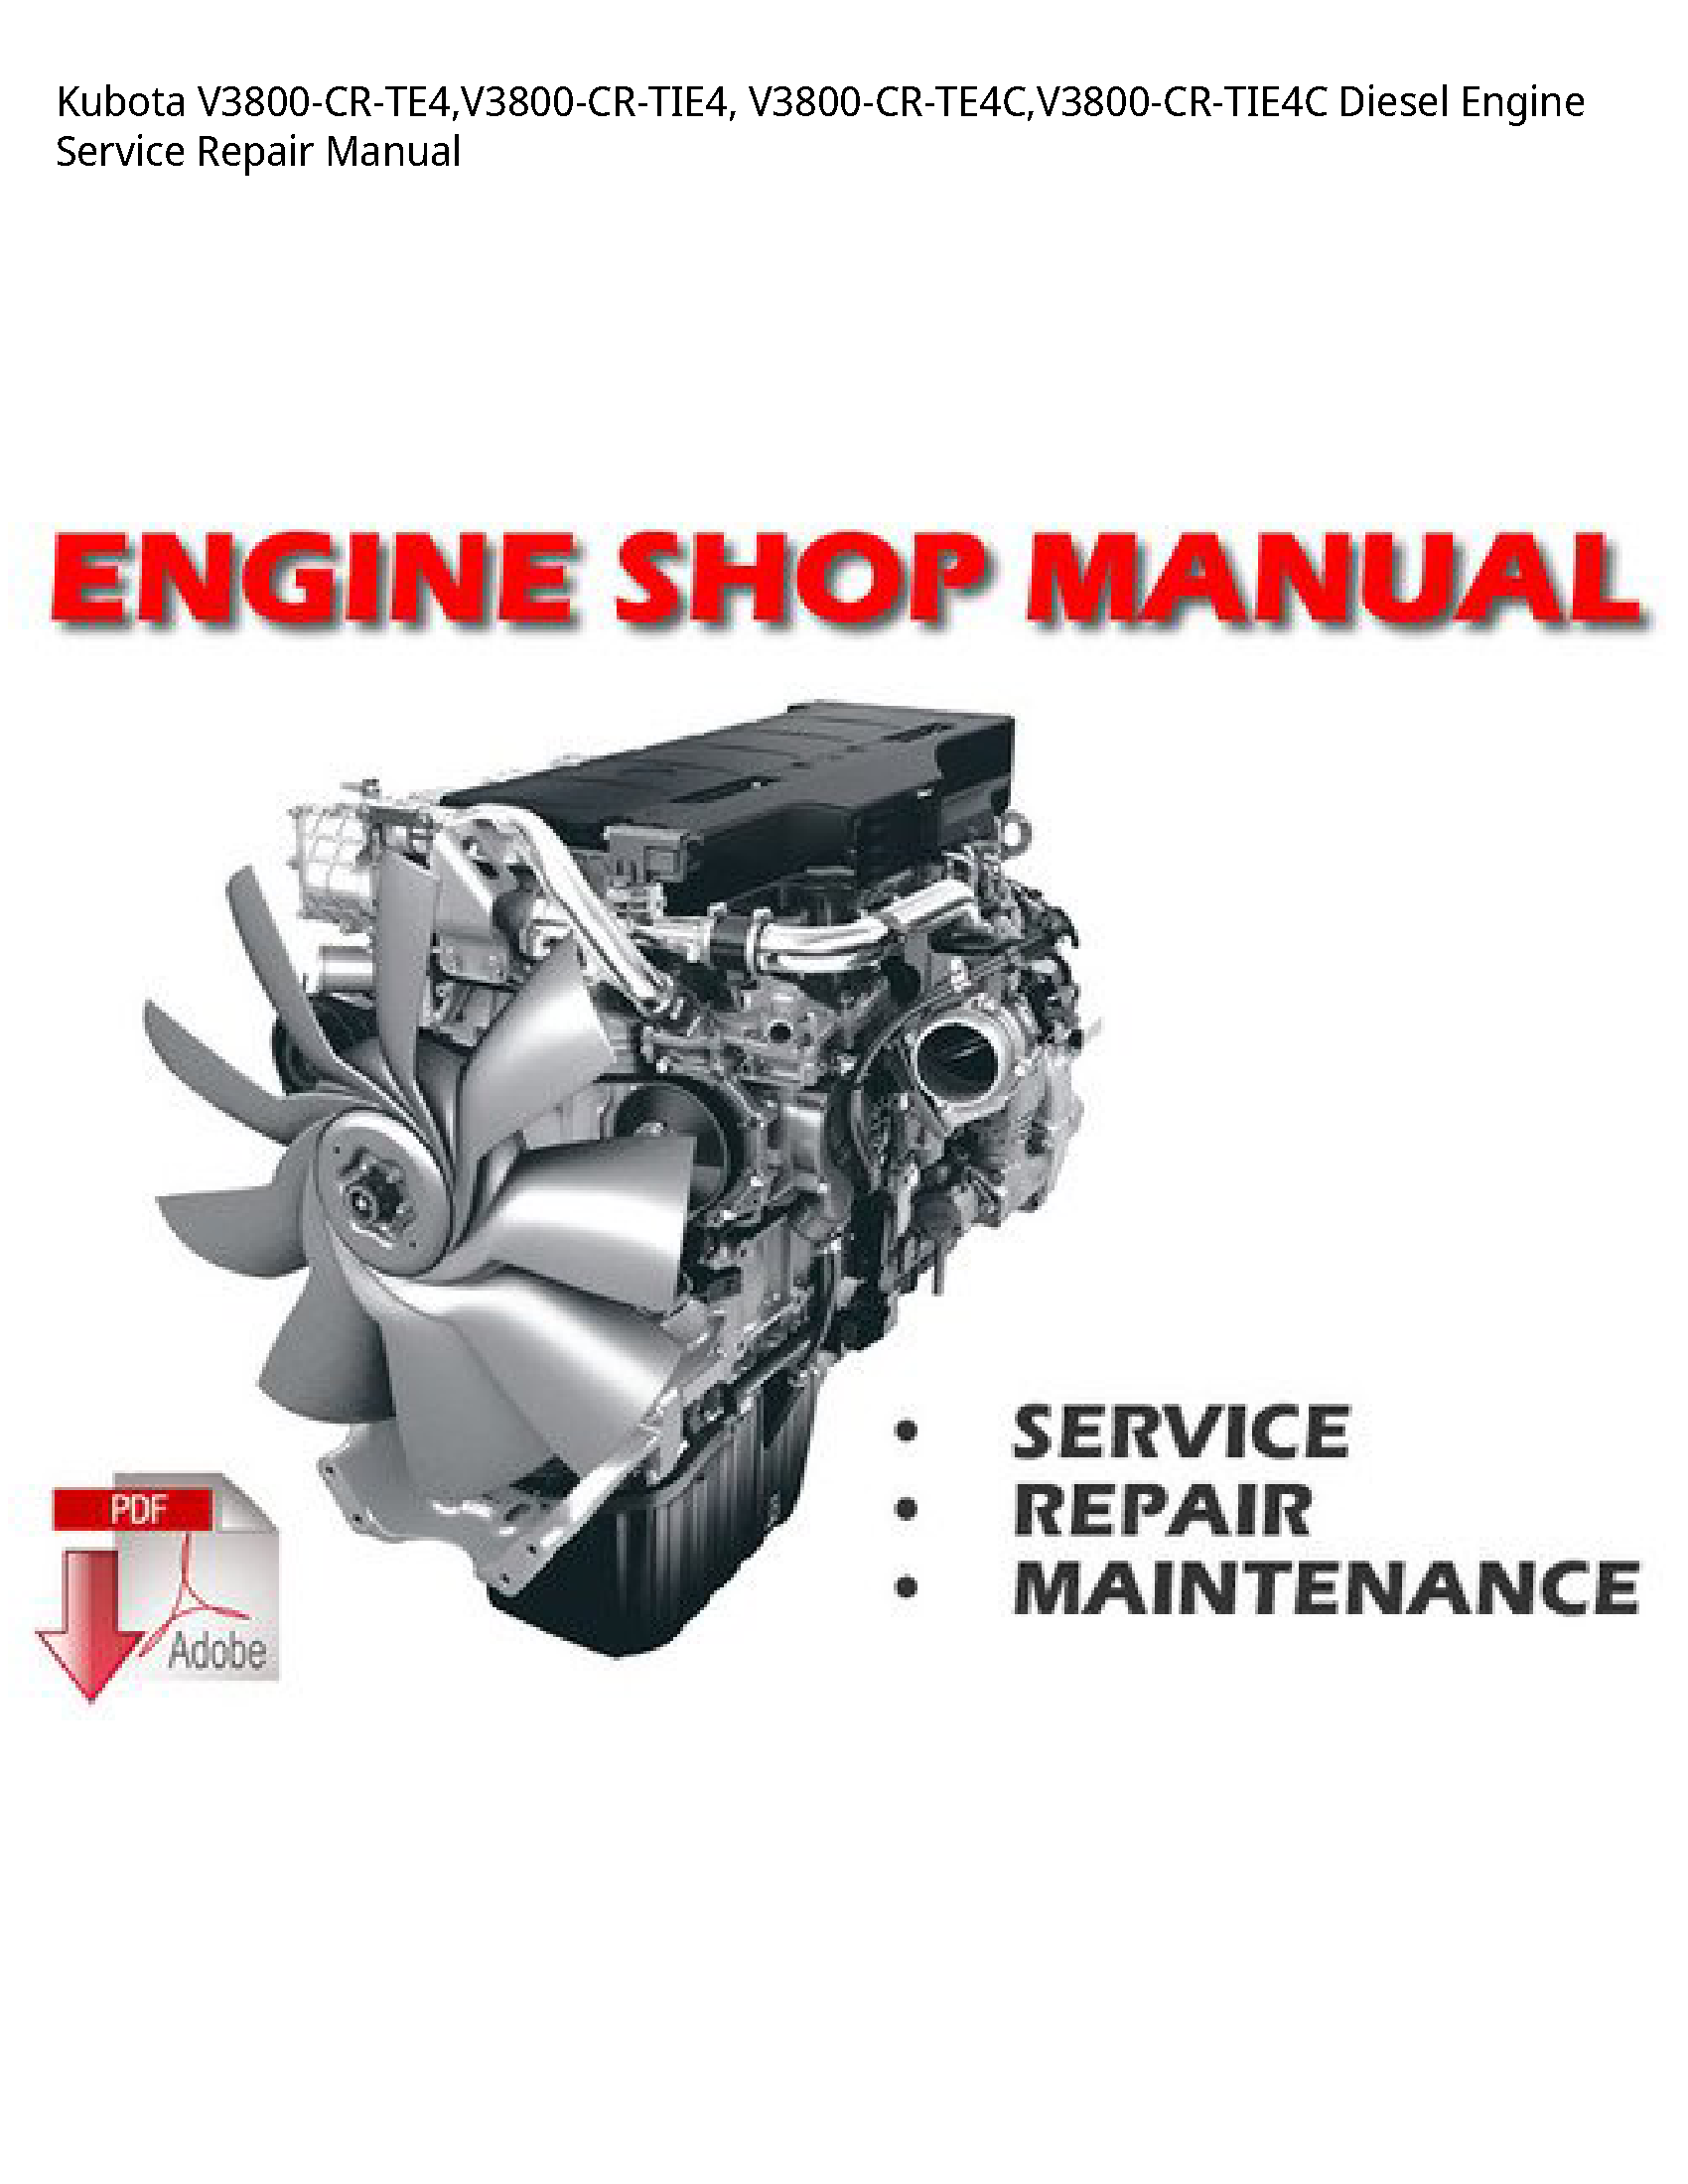 Kubota V3800-CR-TE4 Diesel Engine manual